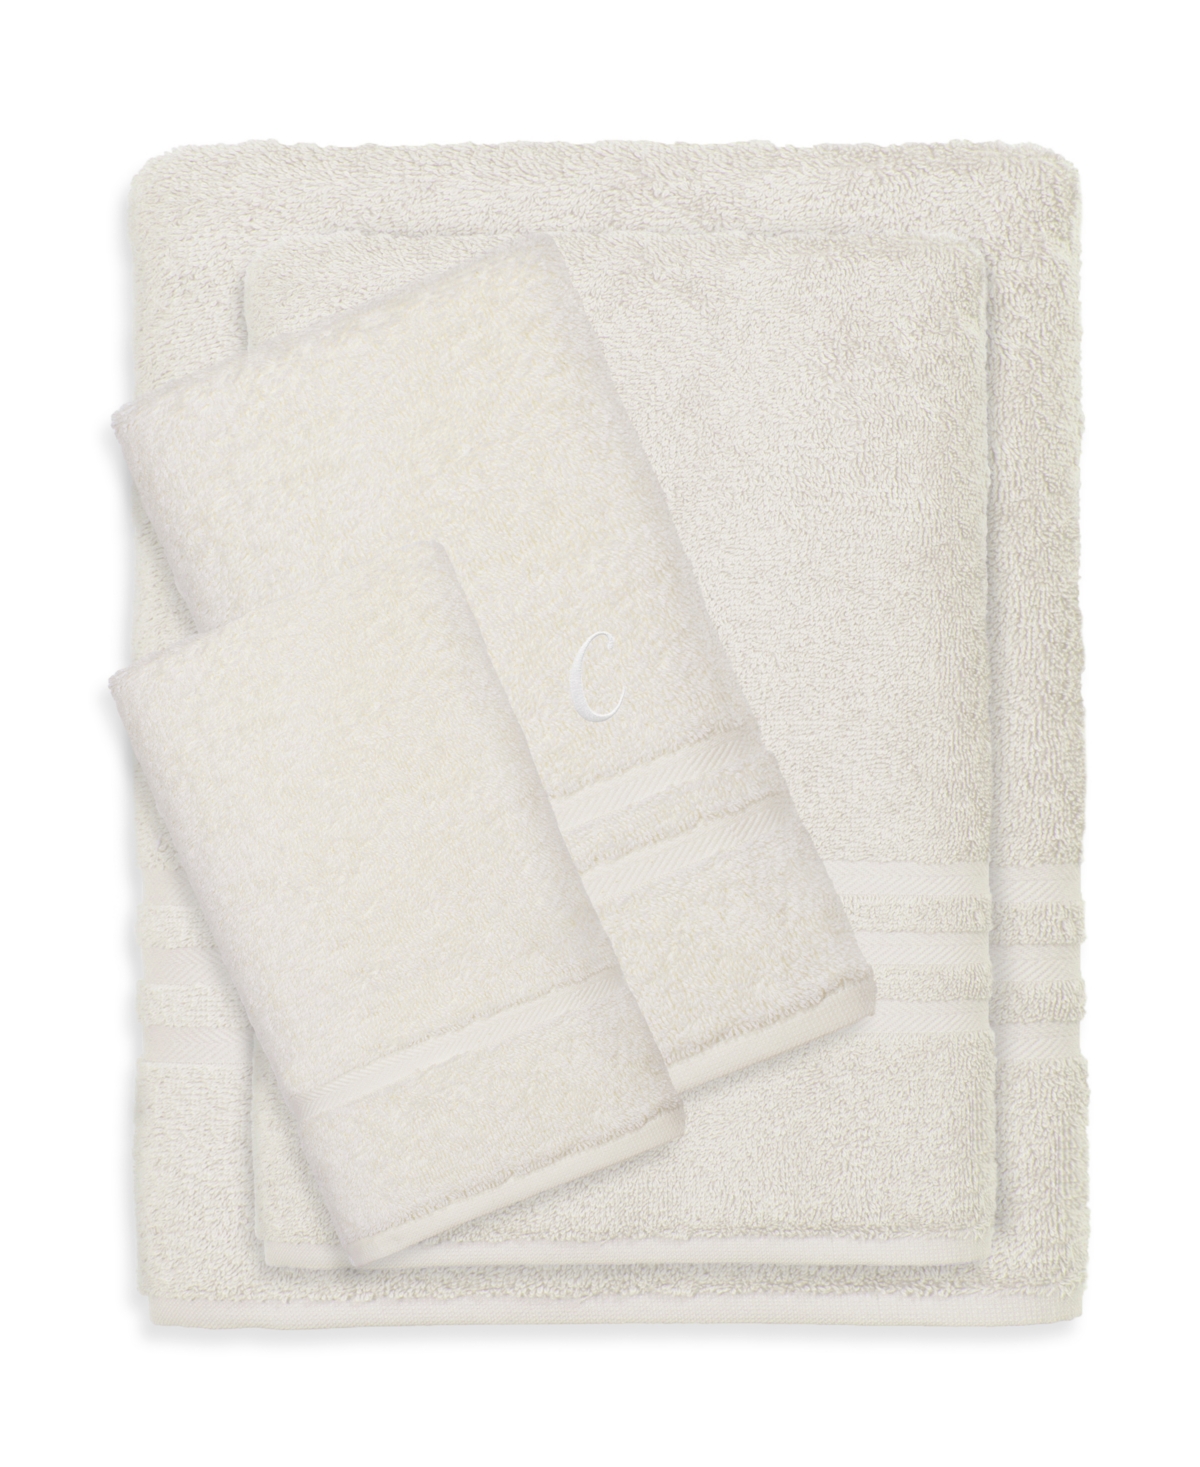 Linum Home Textiles Turkish Cotton Personalized Denzi Towel Set, 4 Piece Bedding In Tan/beige